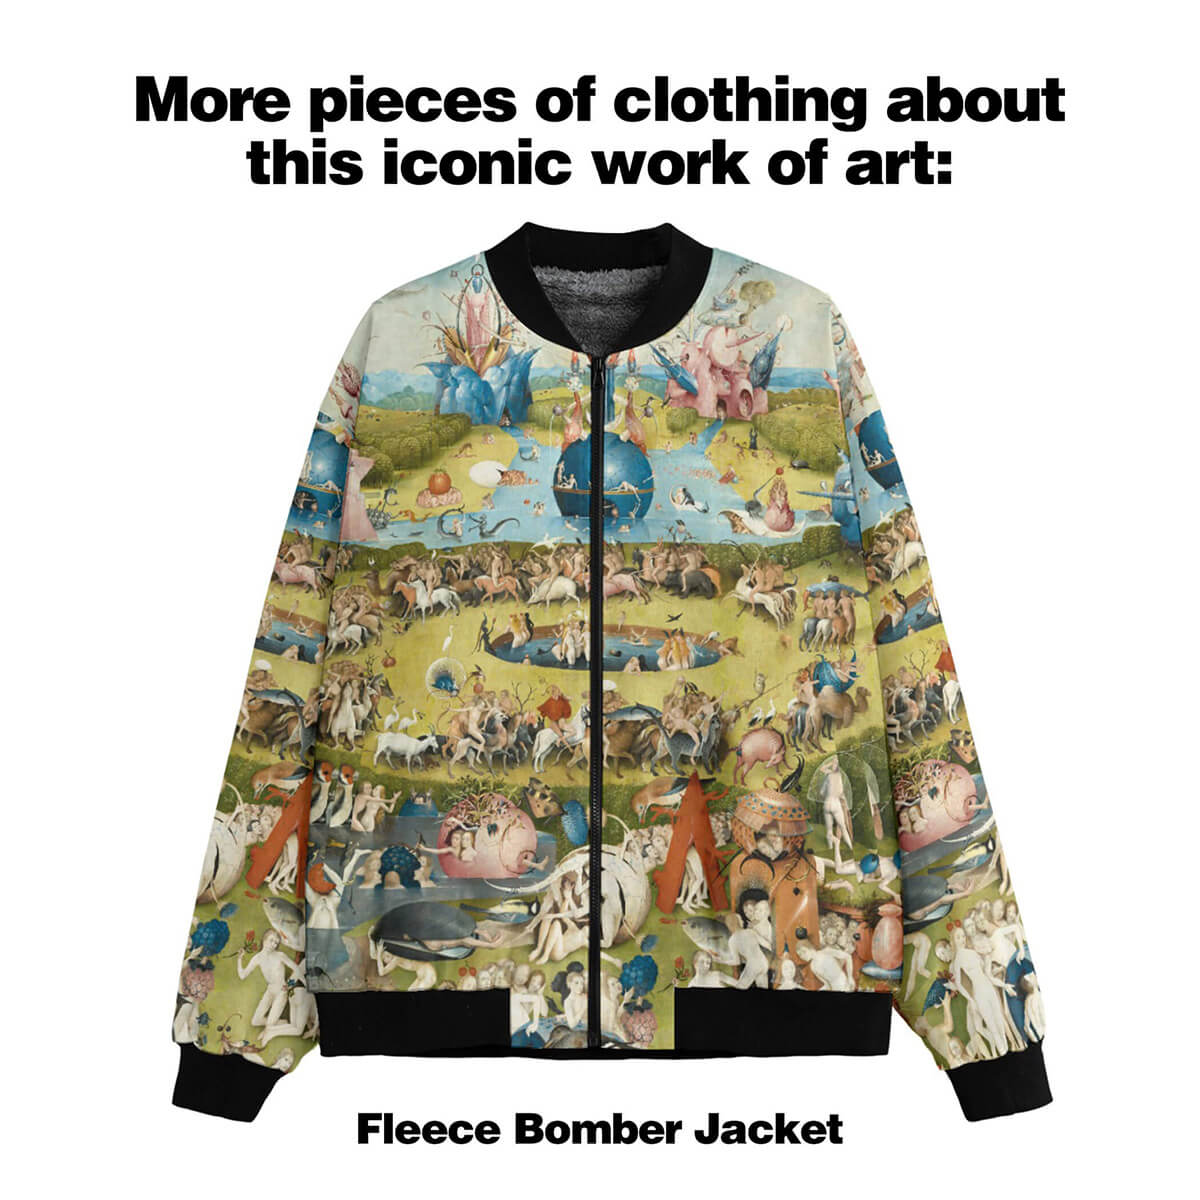 The Garden of Earthly Delights av Hieronymus Bosch Sweatshirt